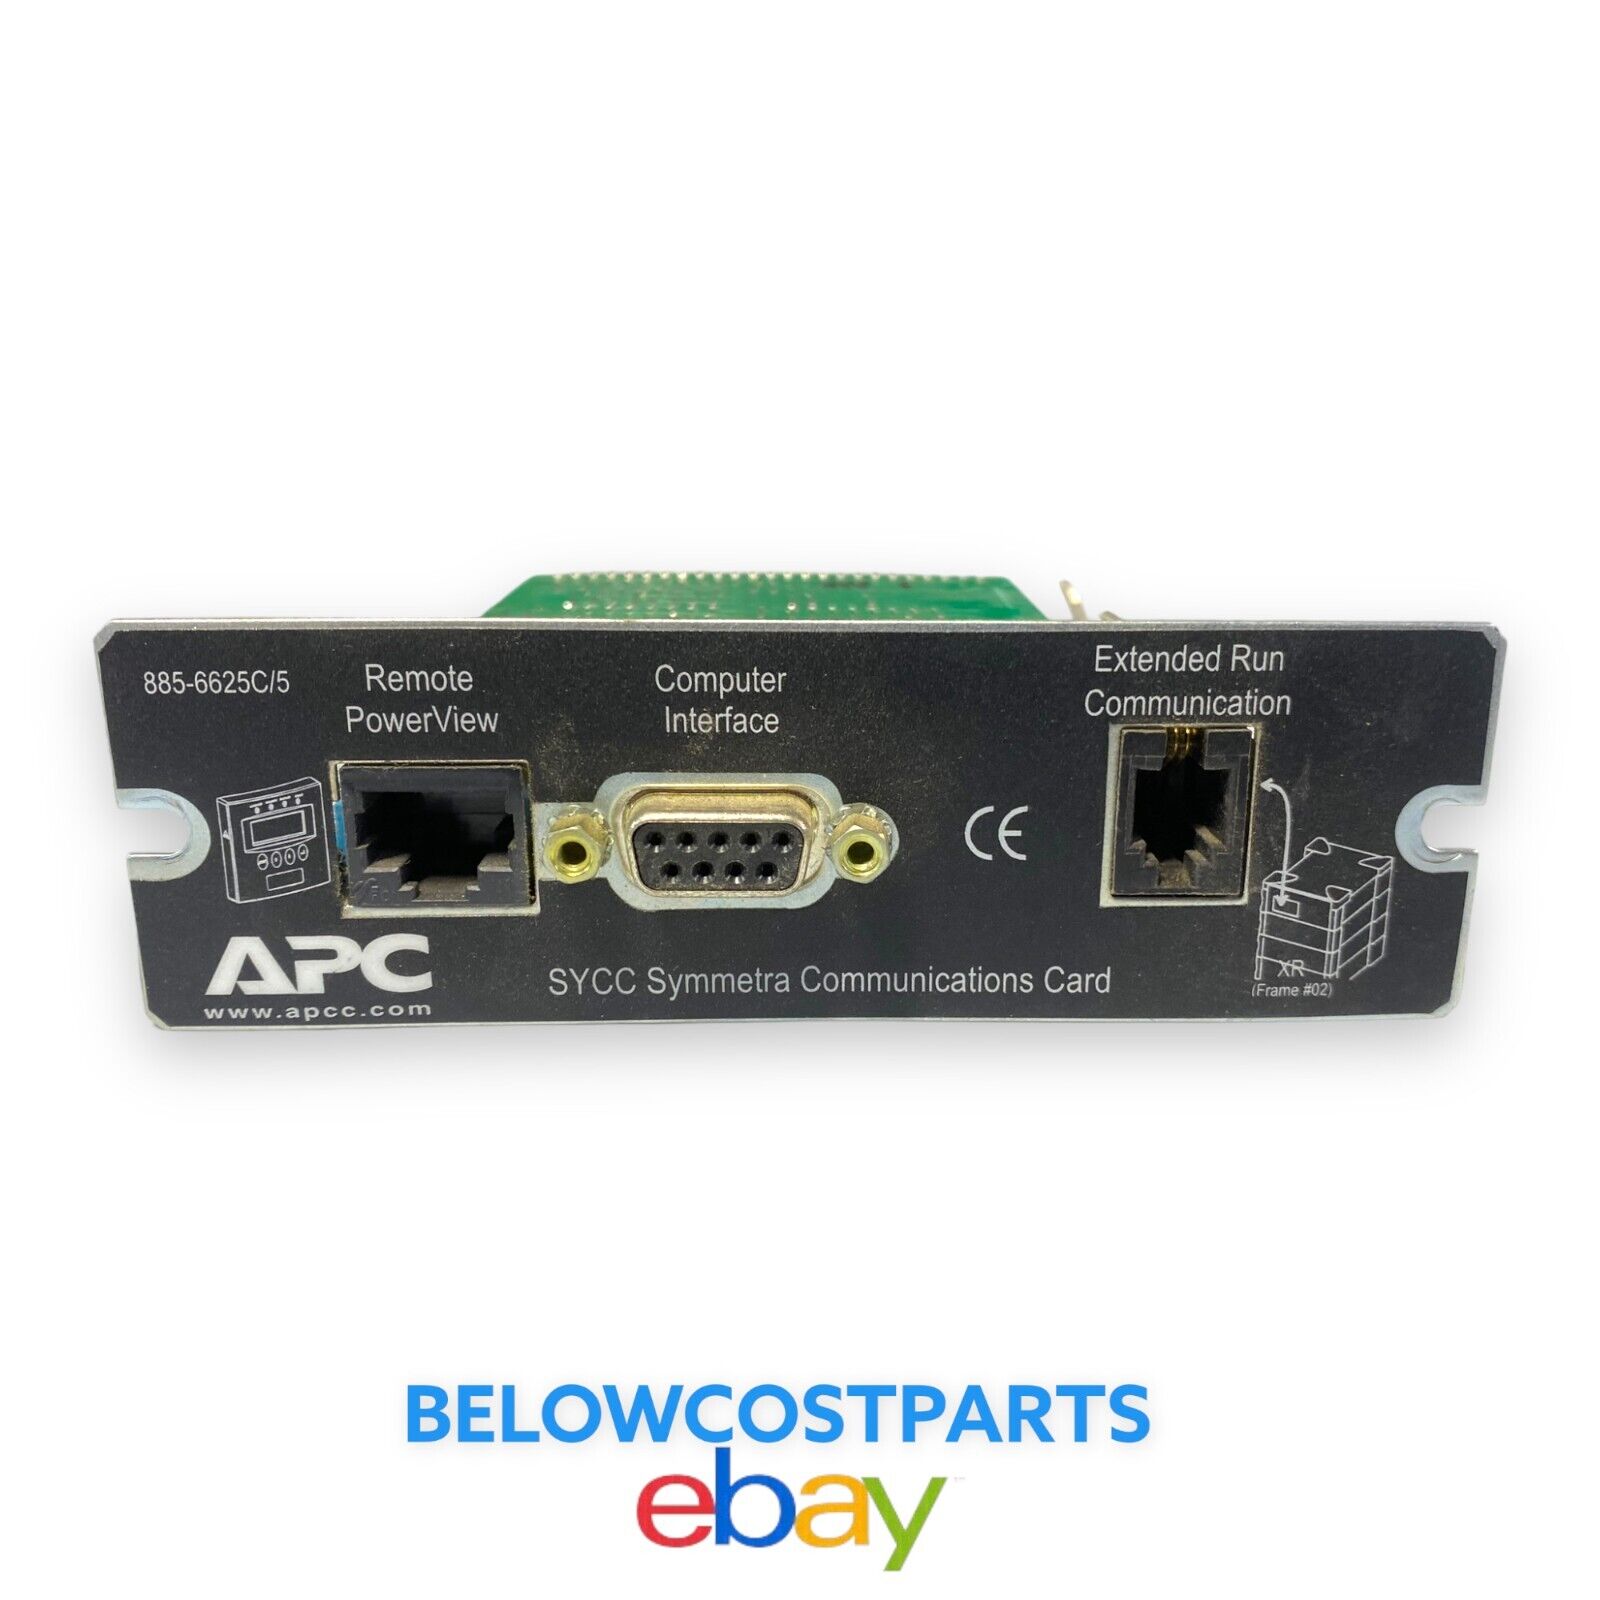 APC 885-6625/C5 Computer Interface Symmetra Communications Card